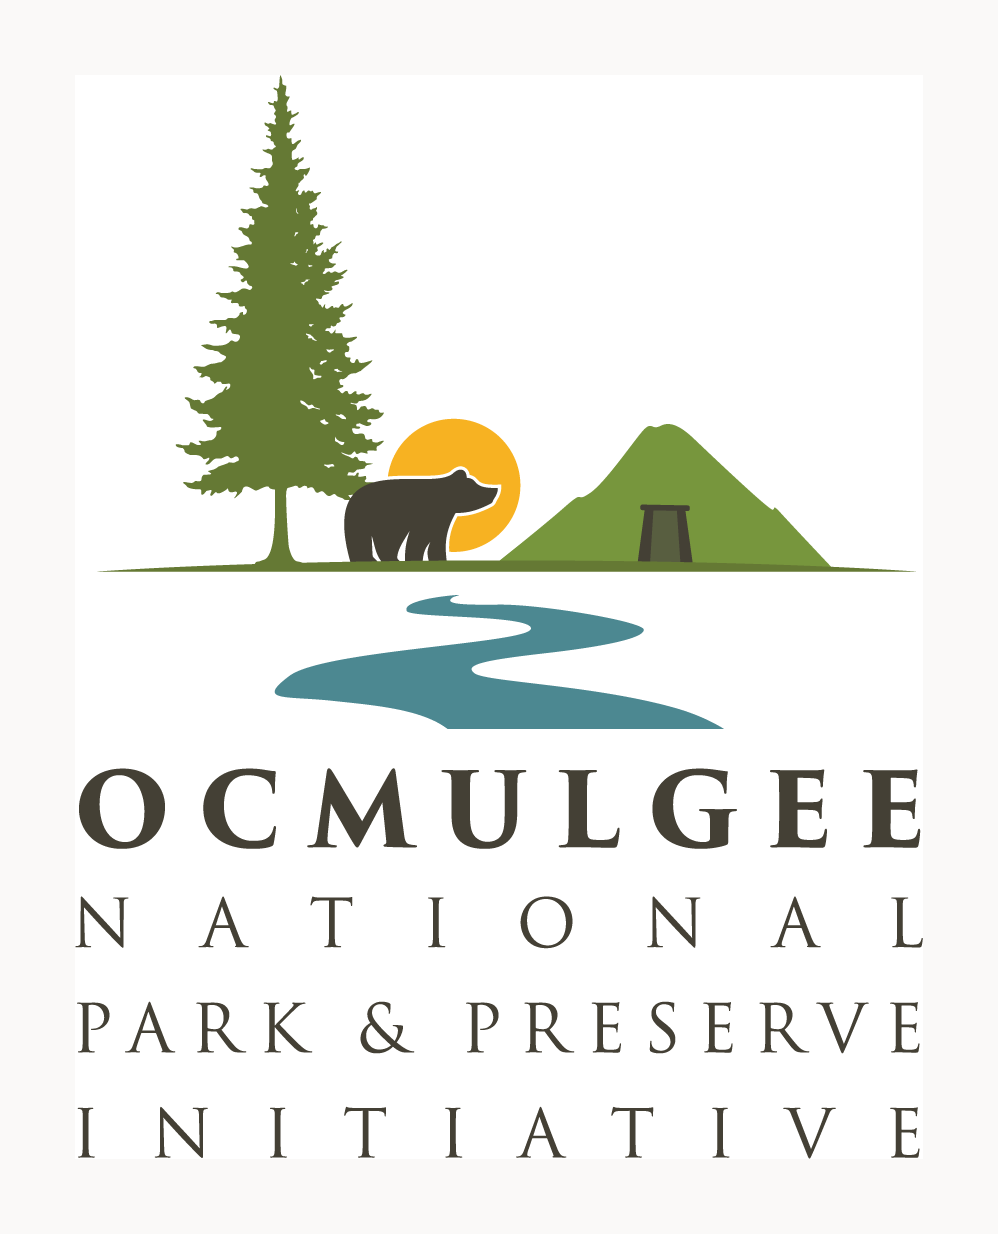 Ocmulgee National Park &amp; Preserve Initiative